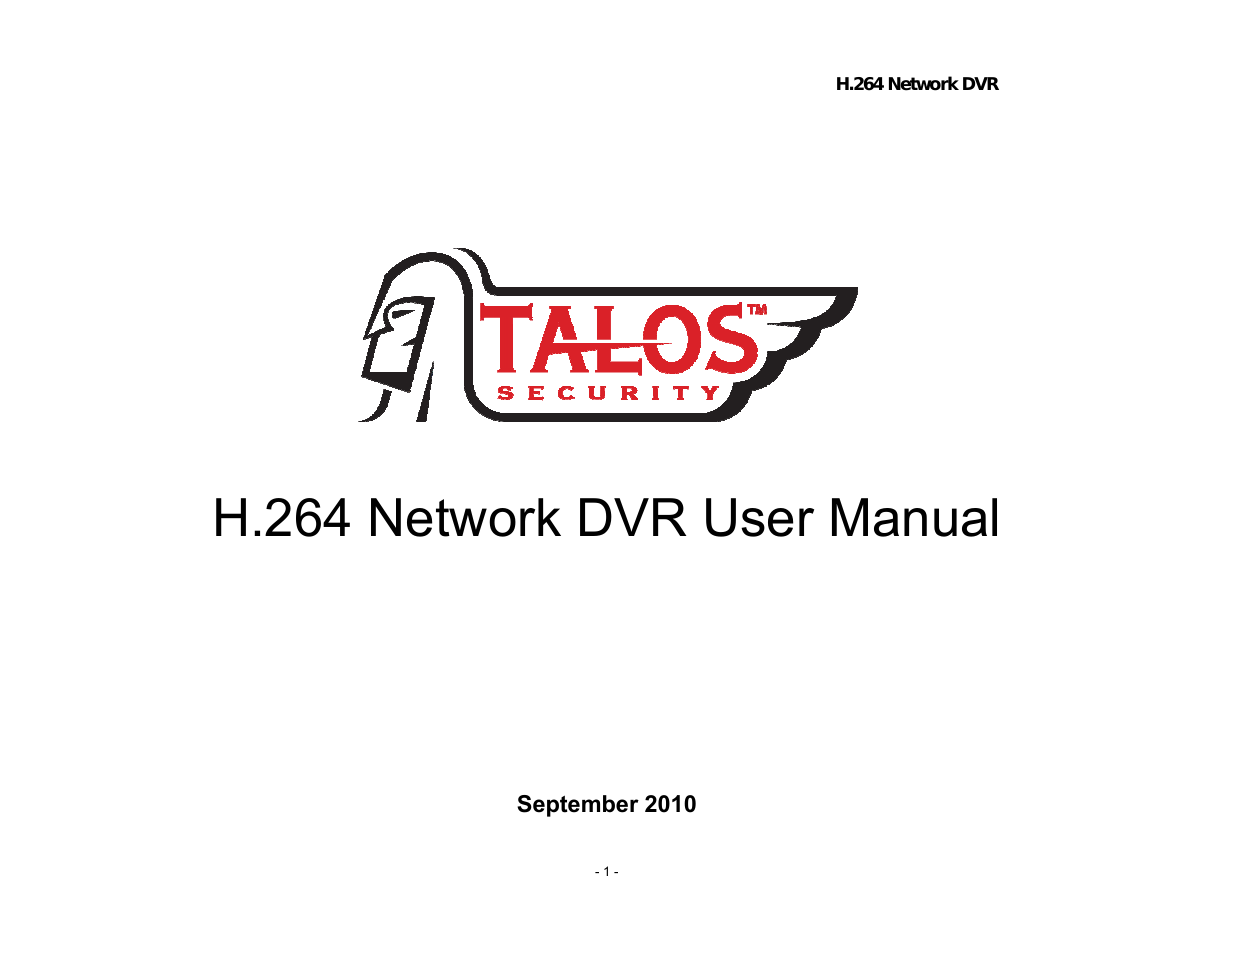 DR400 Series DVR User Manual